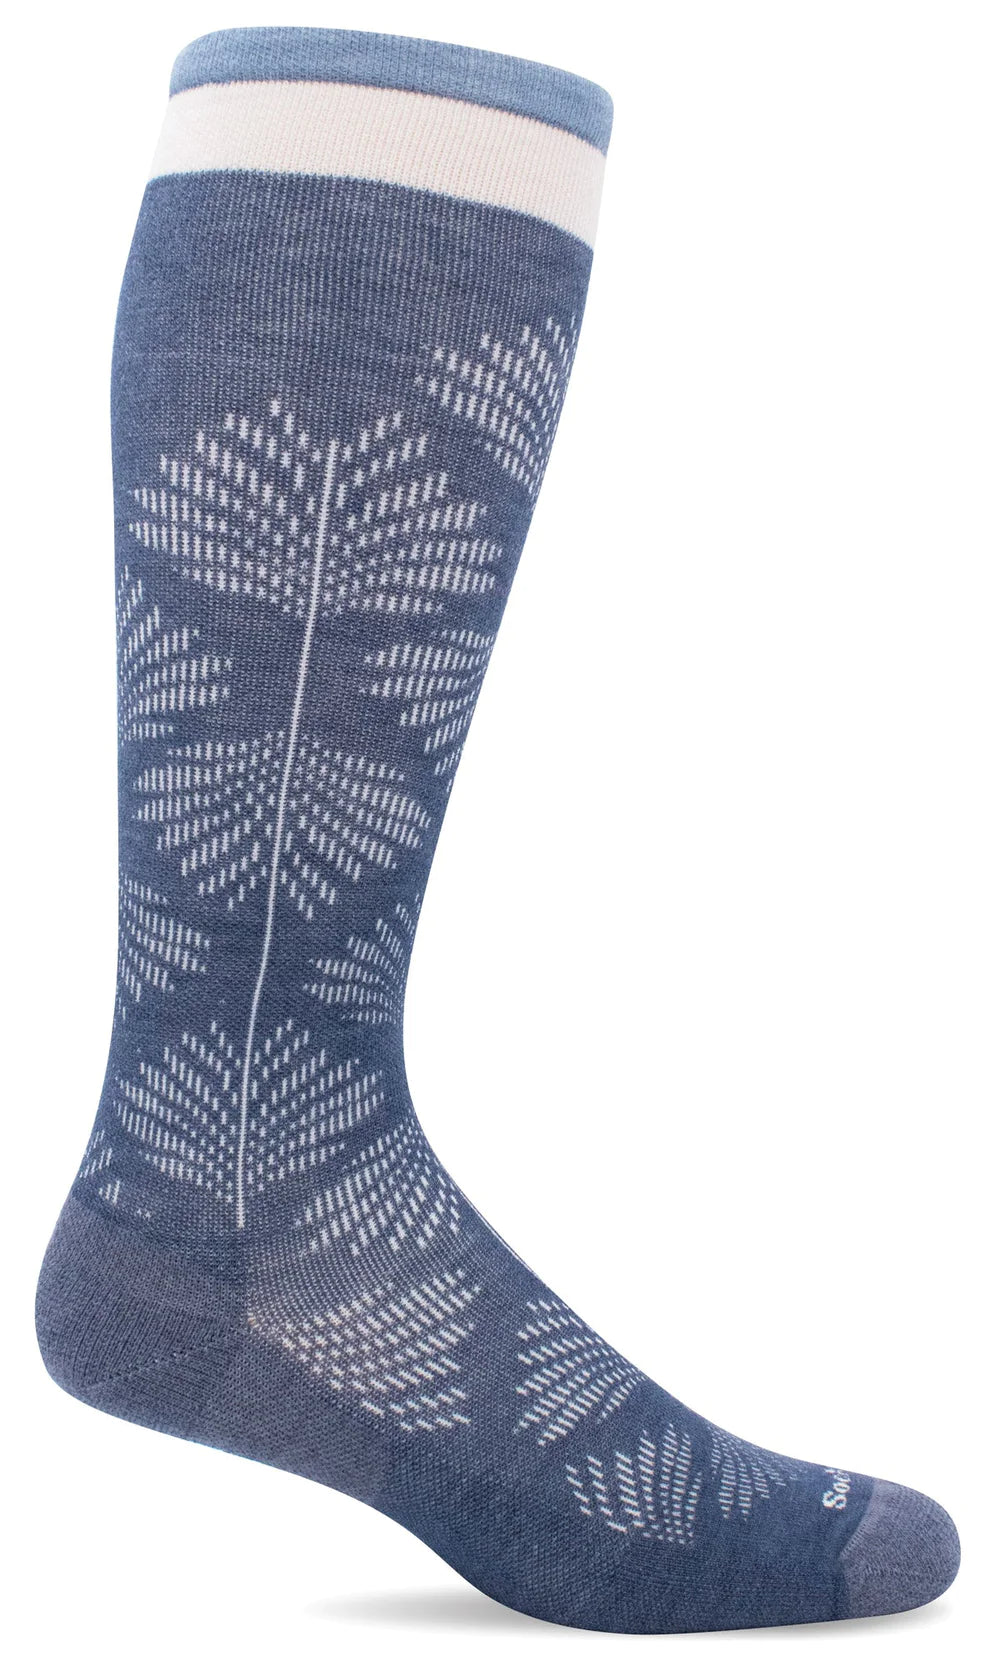 Sockwell - Women's Full Floral Moderate Graduated Compression Socks Wide Calf Fit - Denim